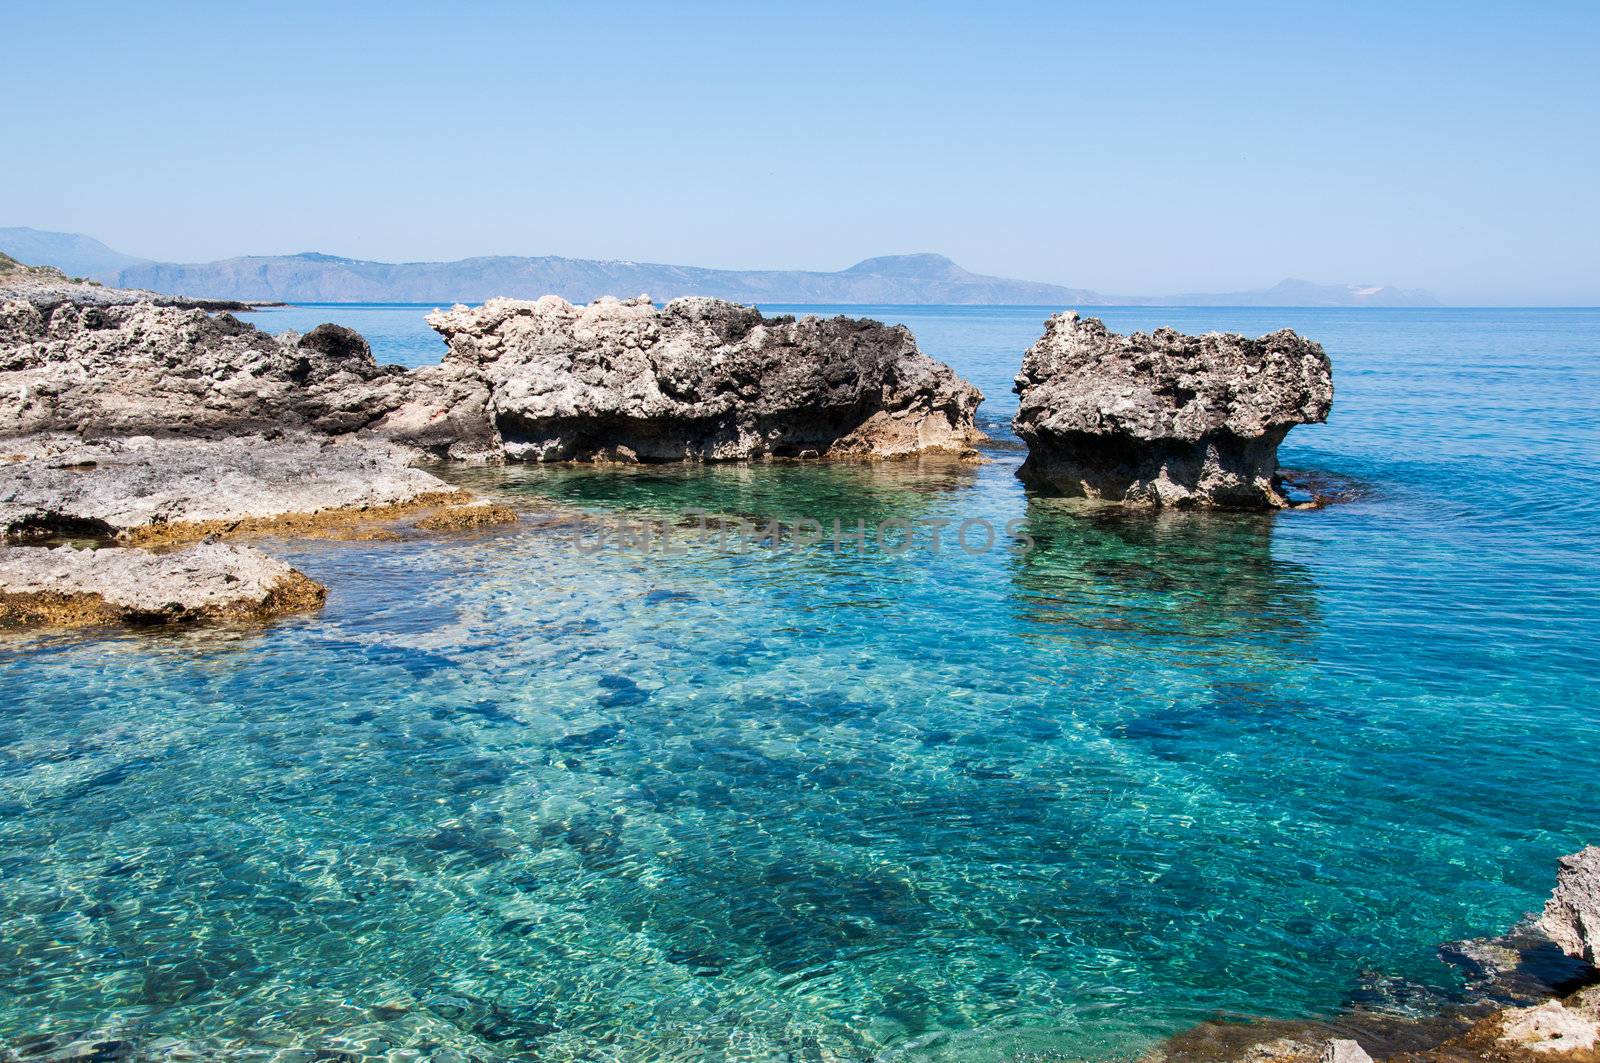 Big rocks and shallow emerald sea at Crete Island Greece.